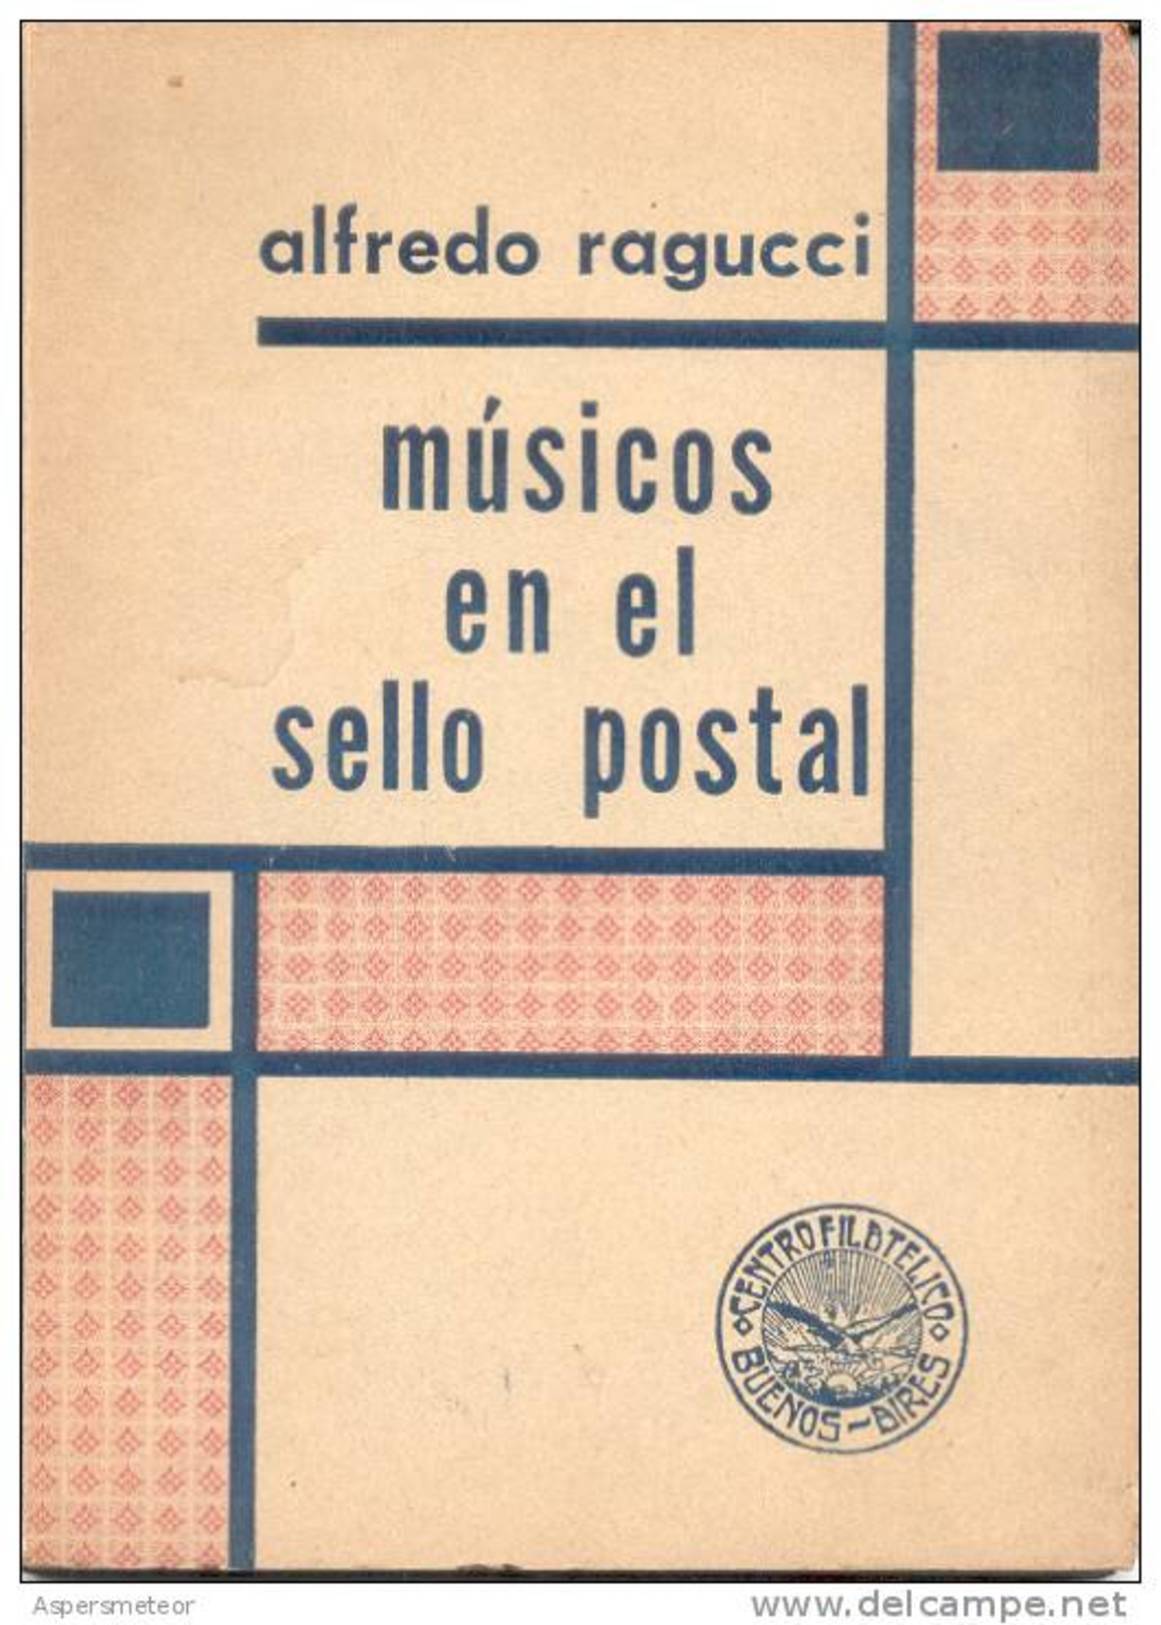 "MUSICOS EN EL SELLO POSTAL" LIBRO DE ALFREDO RAGUCCI 160 PAGINAS RARISIME BEETHOVEN BELLINI BELLMANN BENOIT BERLIOZ BIH - Temas